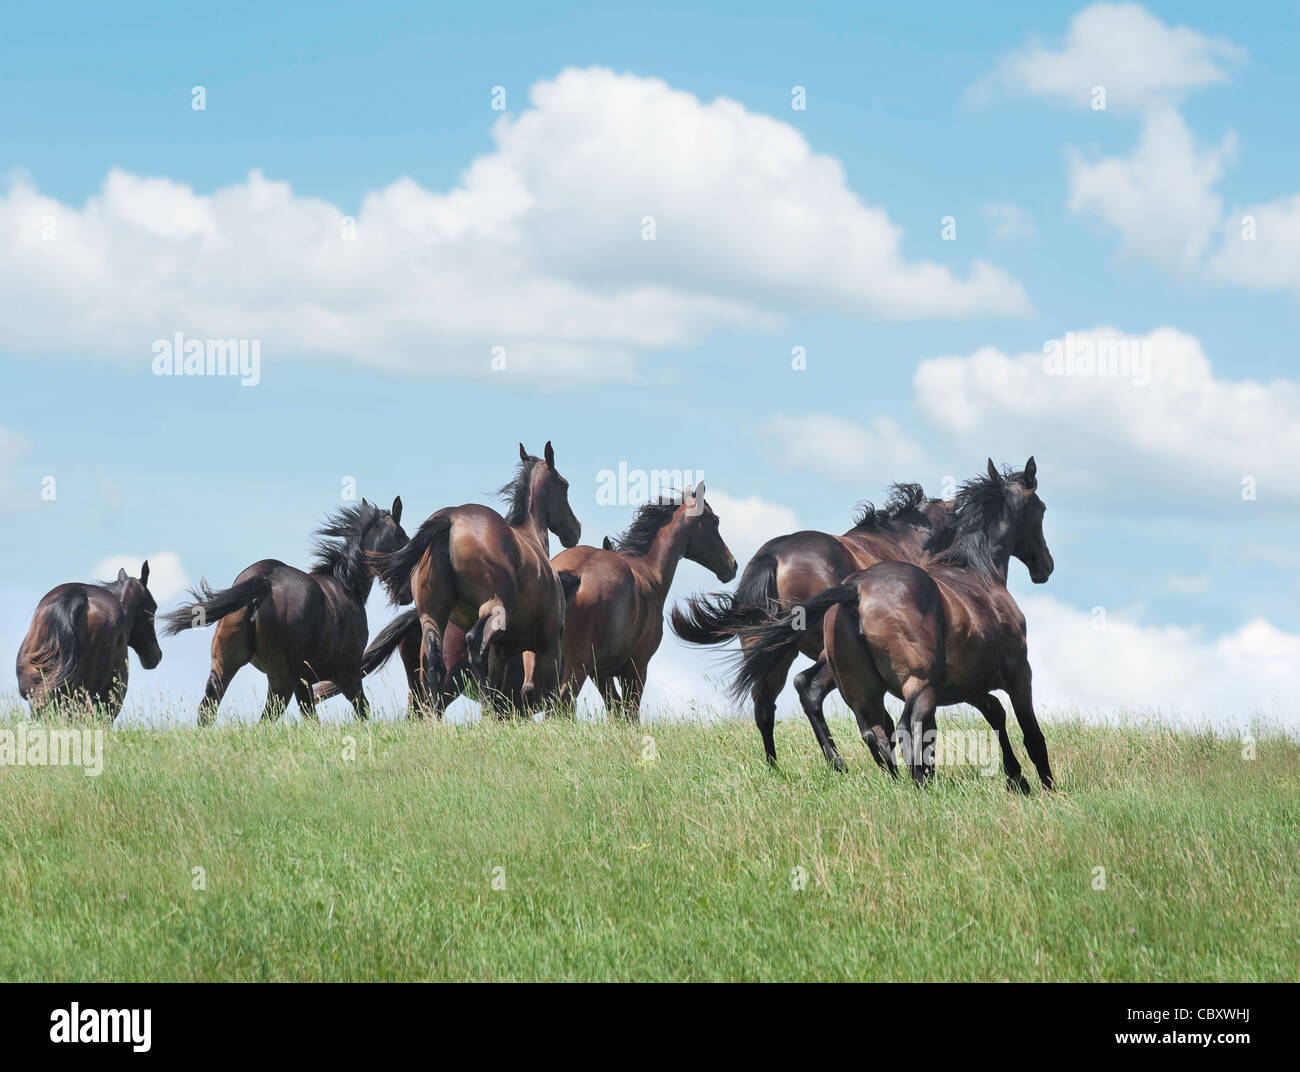 Thoroughbred horse yearling herd Stock Photo